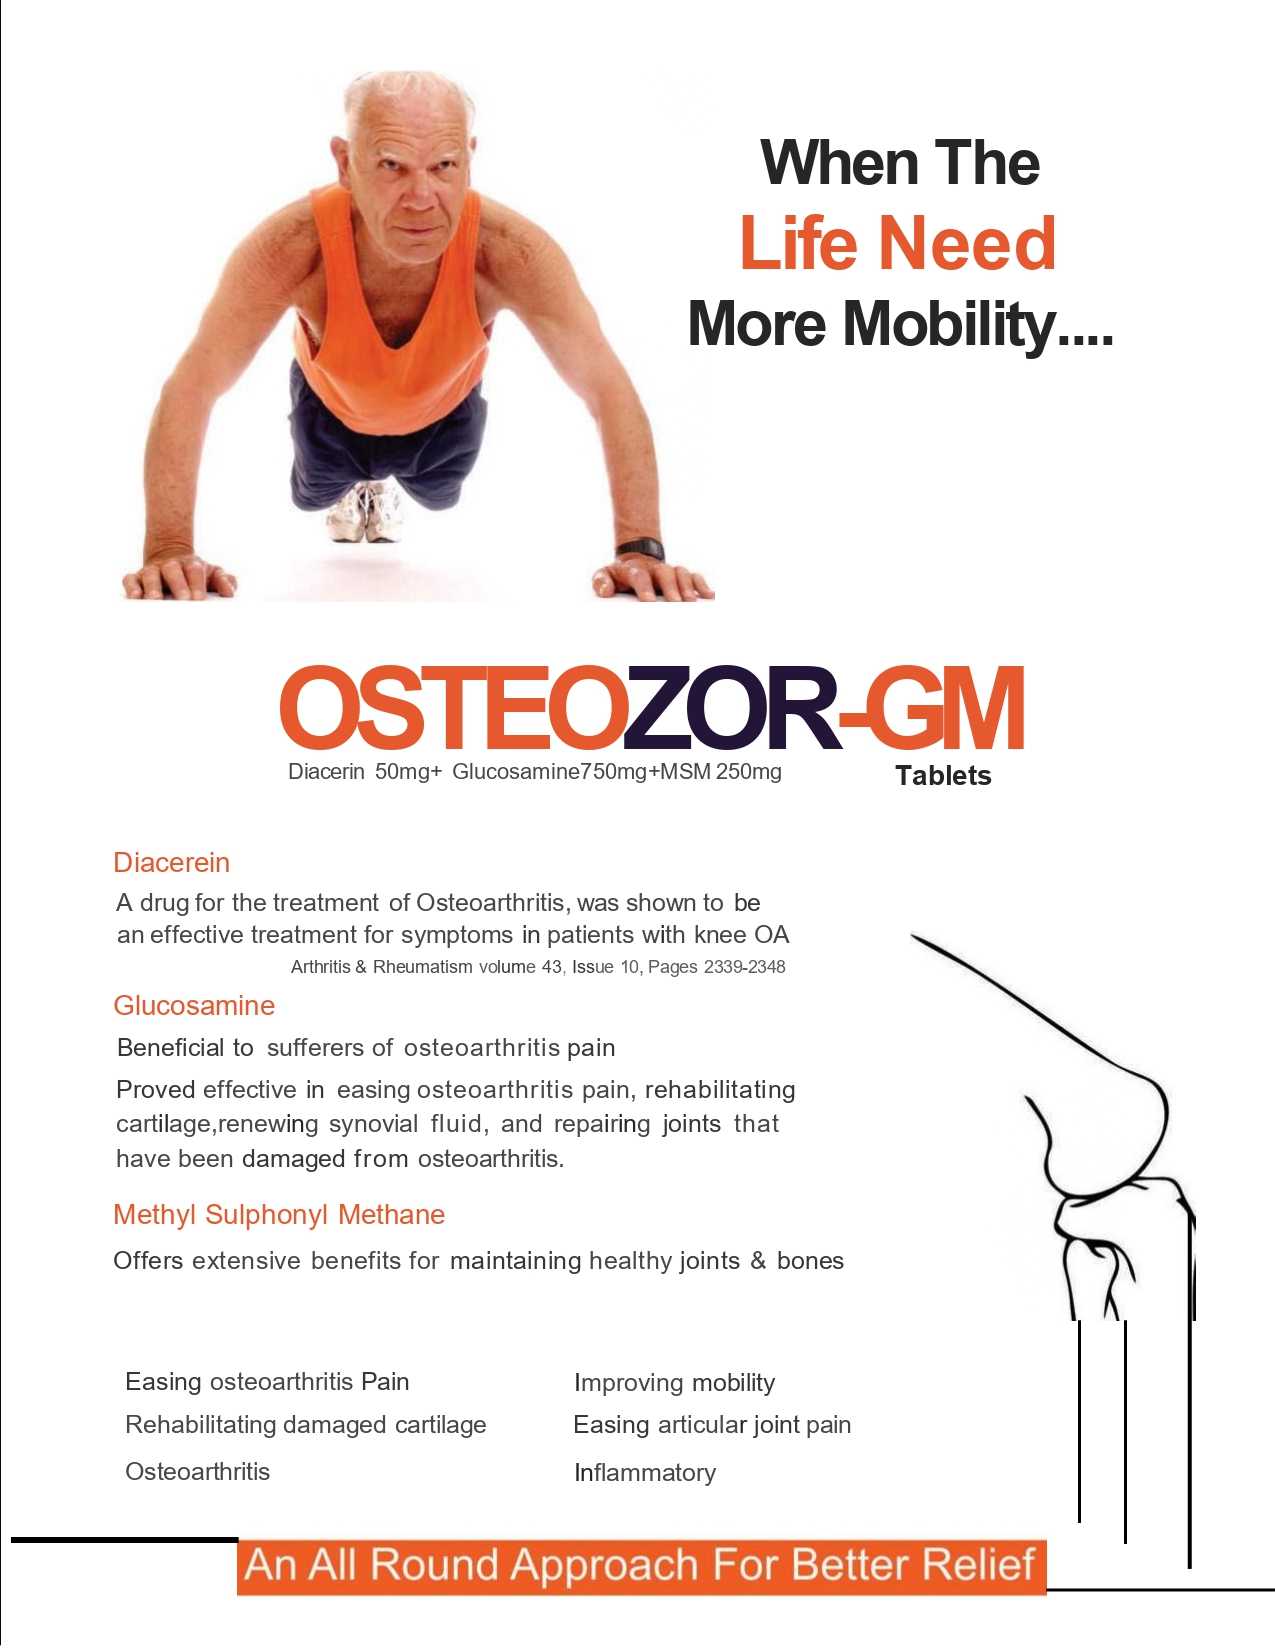 Osteozor-GM